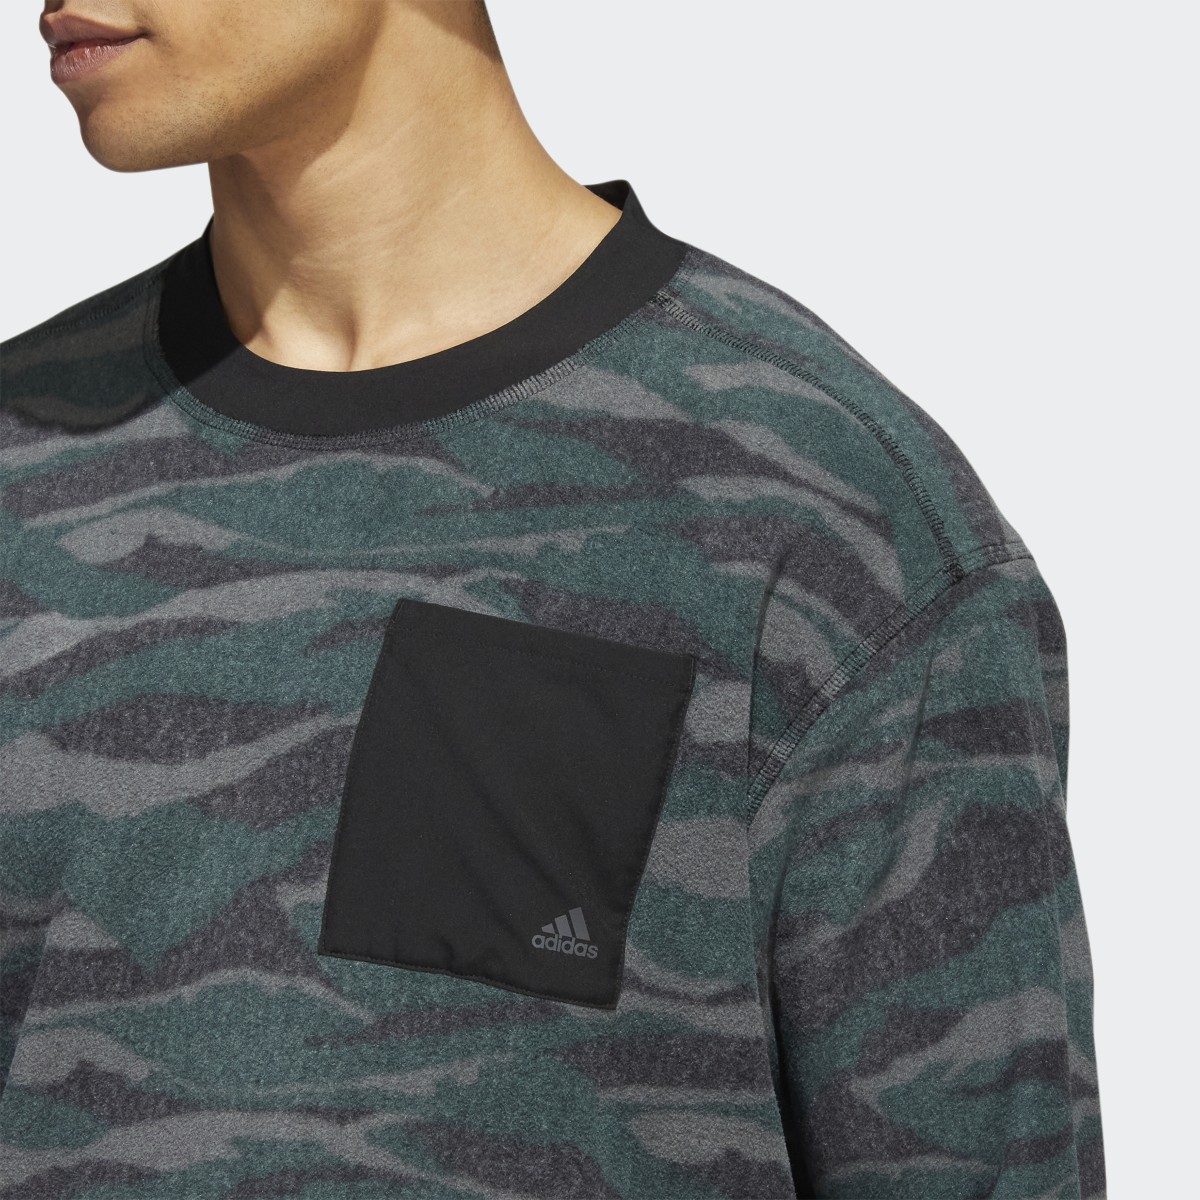 Adidas Texture-Print Sweatshirt. 7